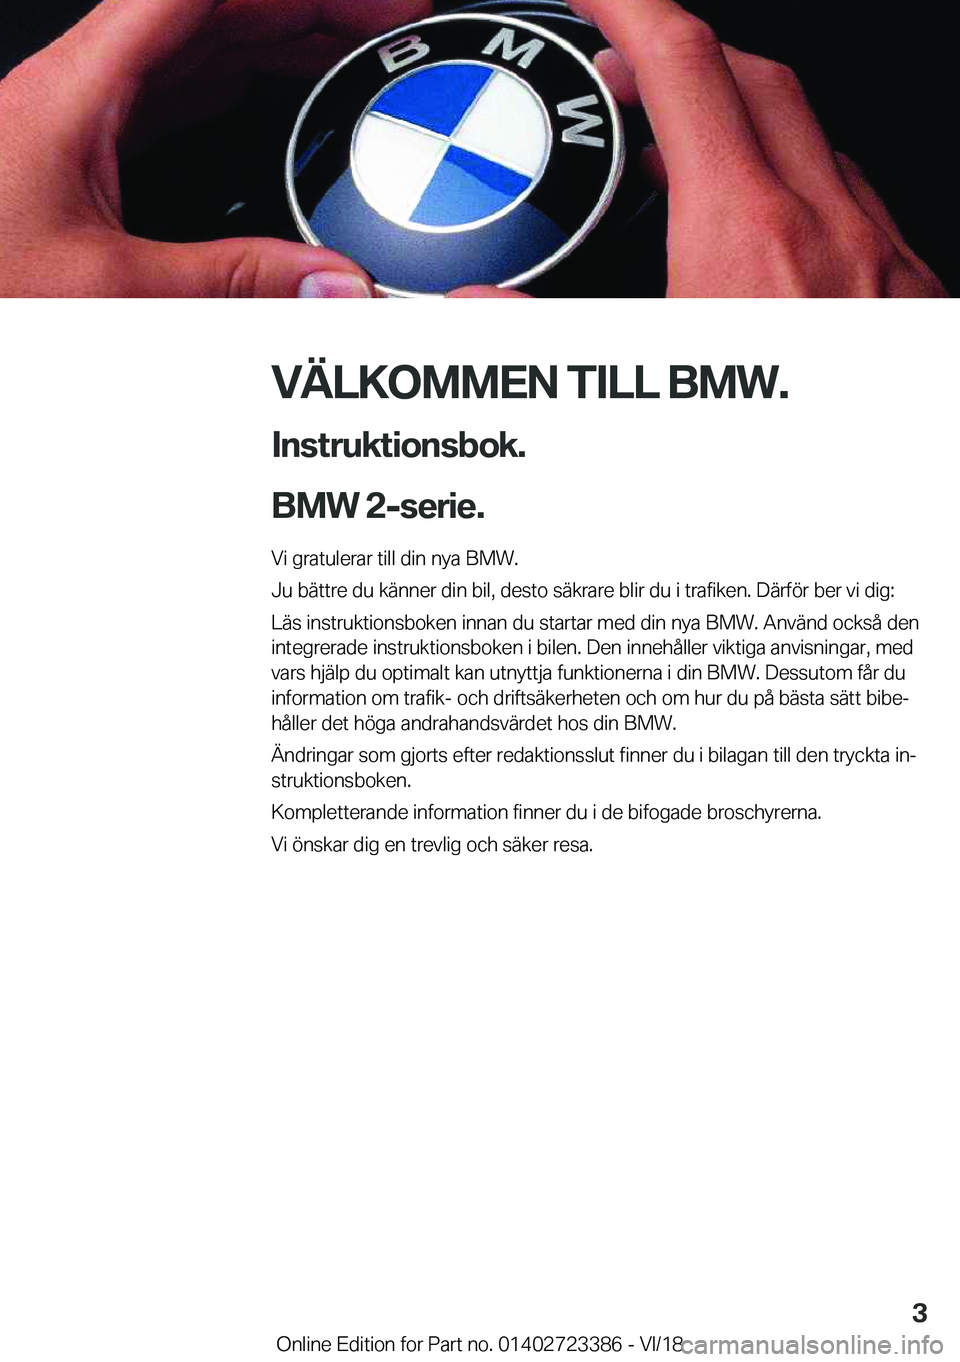 BMW 2 SERIES COUPE 2019  InstruktionsbÖcker (in Swedish) �V�Ä�L�K�O�M�M�E�N��T�I�L�L��B�M�W�.�I�n�s�t�r�u�k�t�i�o�n�s�b�o�k�.
�B�M�W��2�-�s�e�r�i�e�.�
�V�i��g�r�a�t�u�l�e�r�a�r��t�i�l�l��d�i�n��n�y�a��B�M�W�.
�J�u��b�ä�t�t�r�e��d�u��k�ä�n�n�e